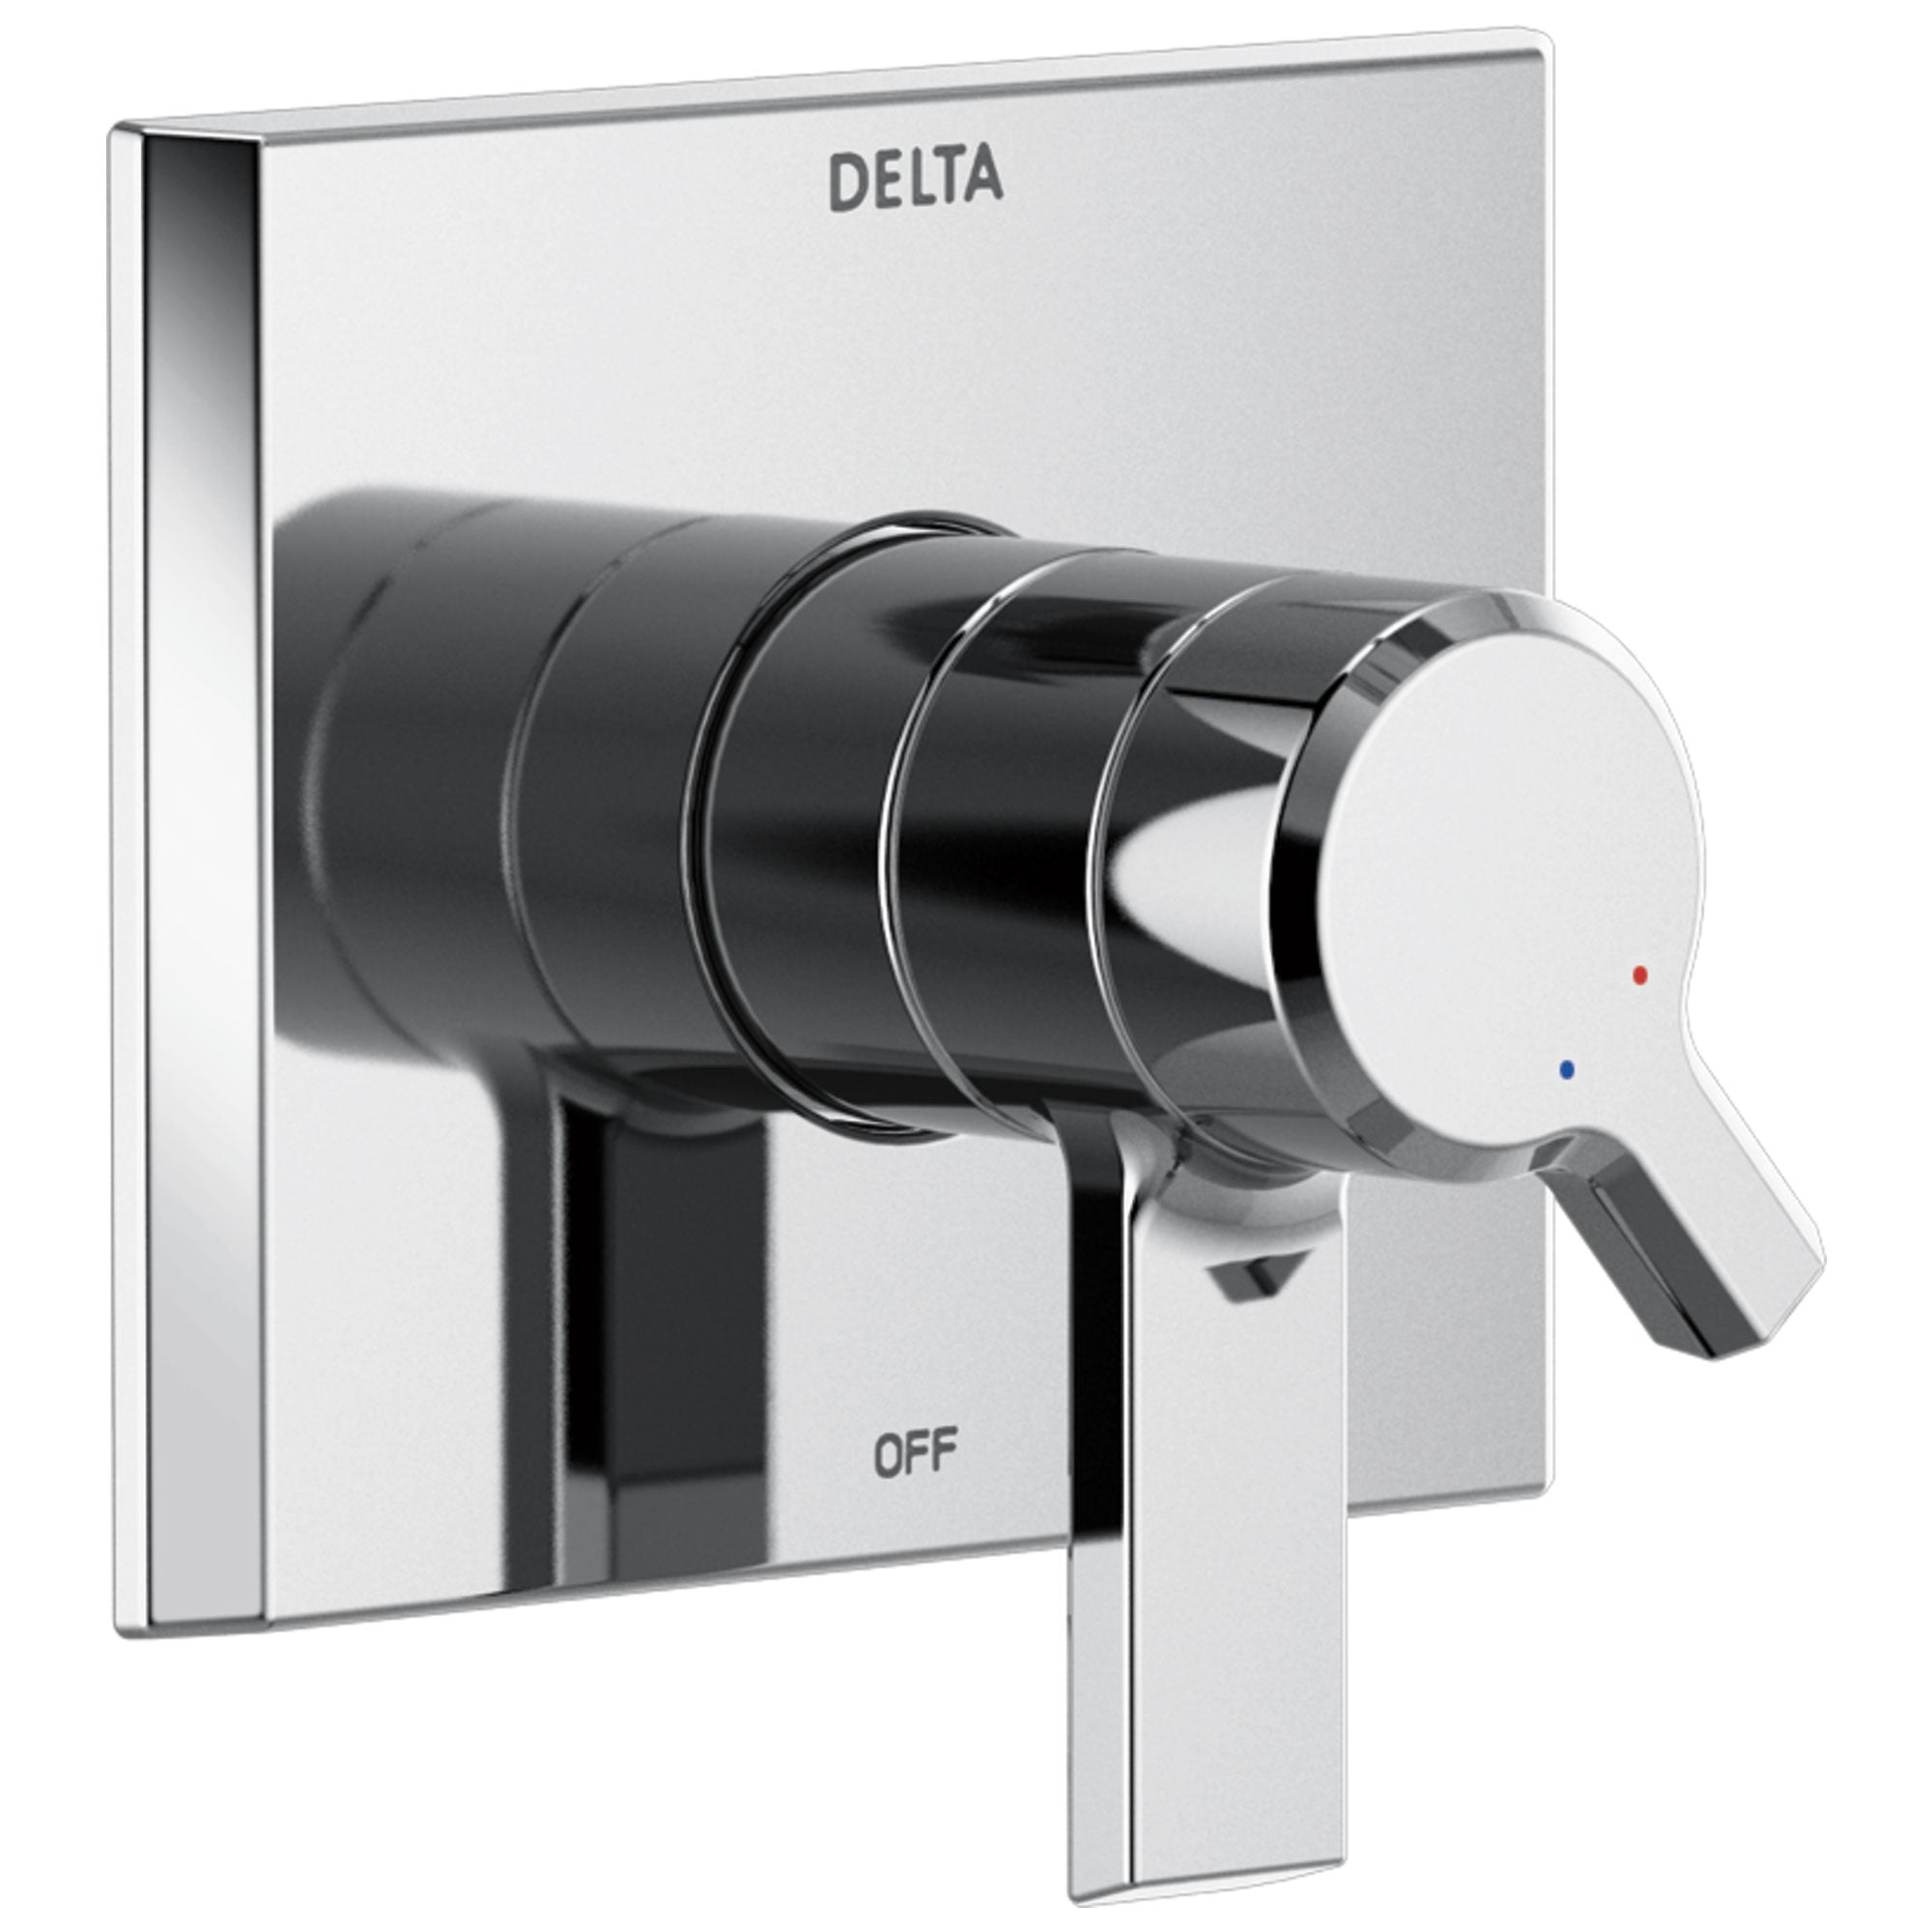 Delta Pivotal Chrome Finish Monitor 17 Series Shower Faucet Control Only Trim Kit (Requires Valve) DT17099